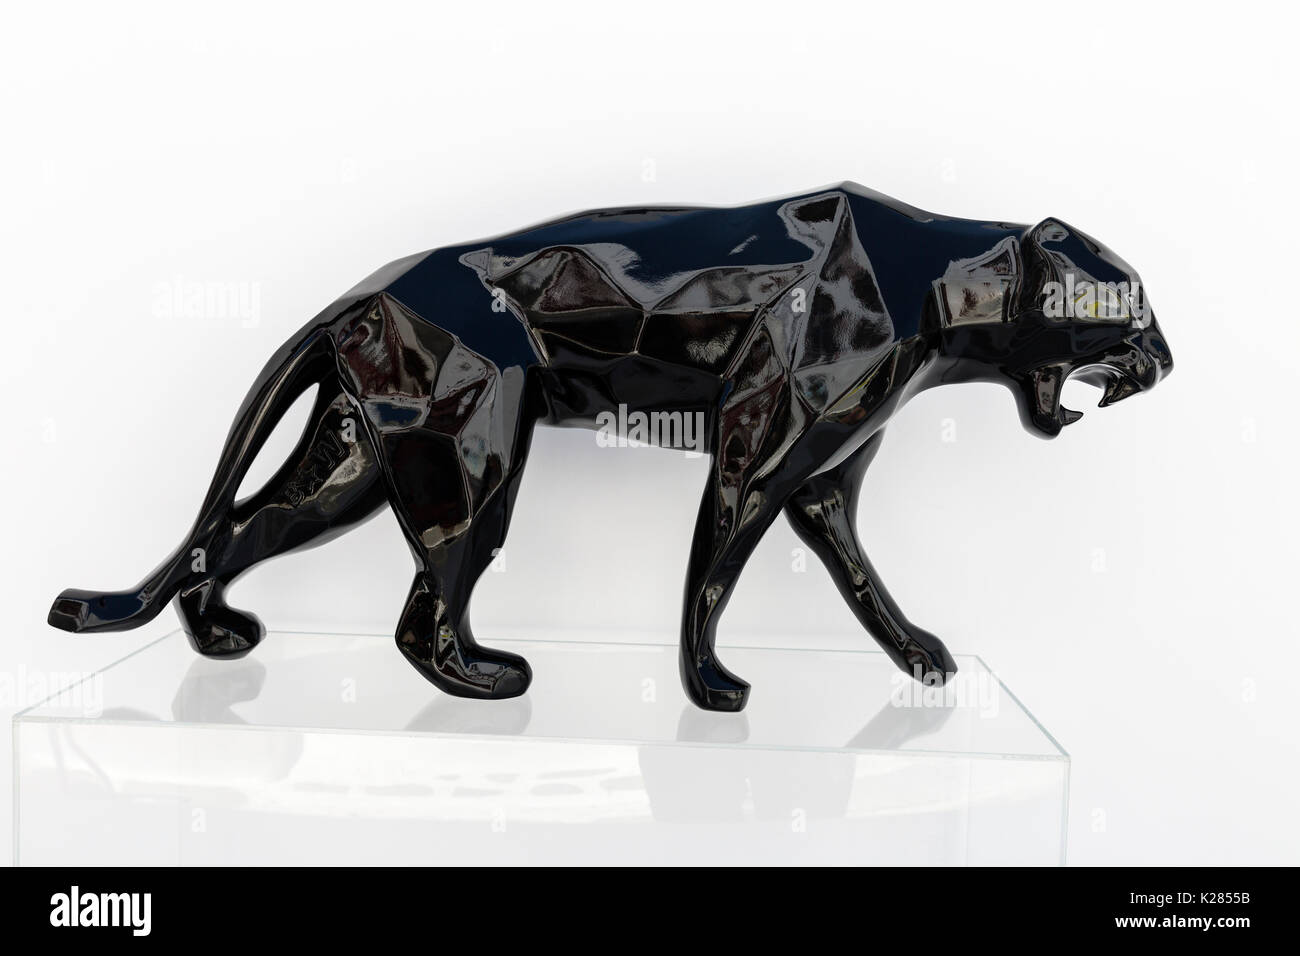 Black Panther Skulptur außerhalb Kapopoulos Finearts shop, Mykonos, Griechenland. Stockfoto